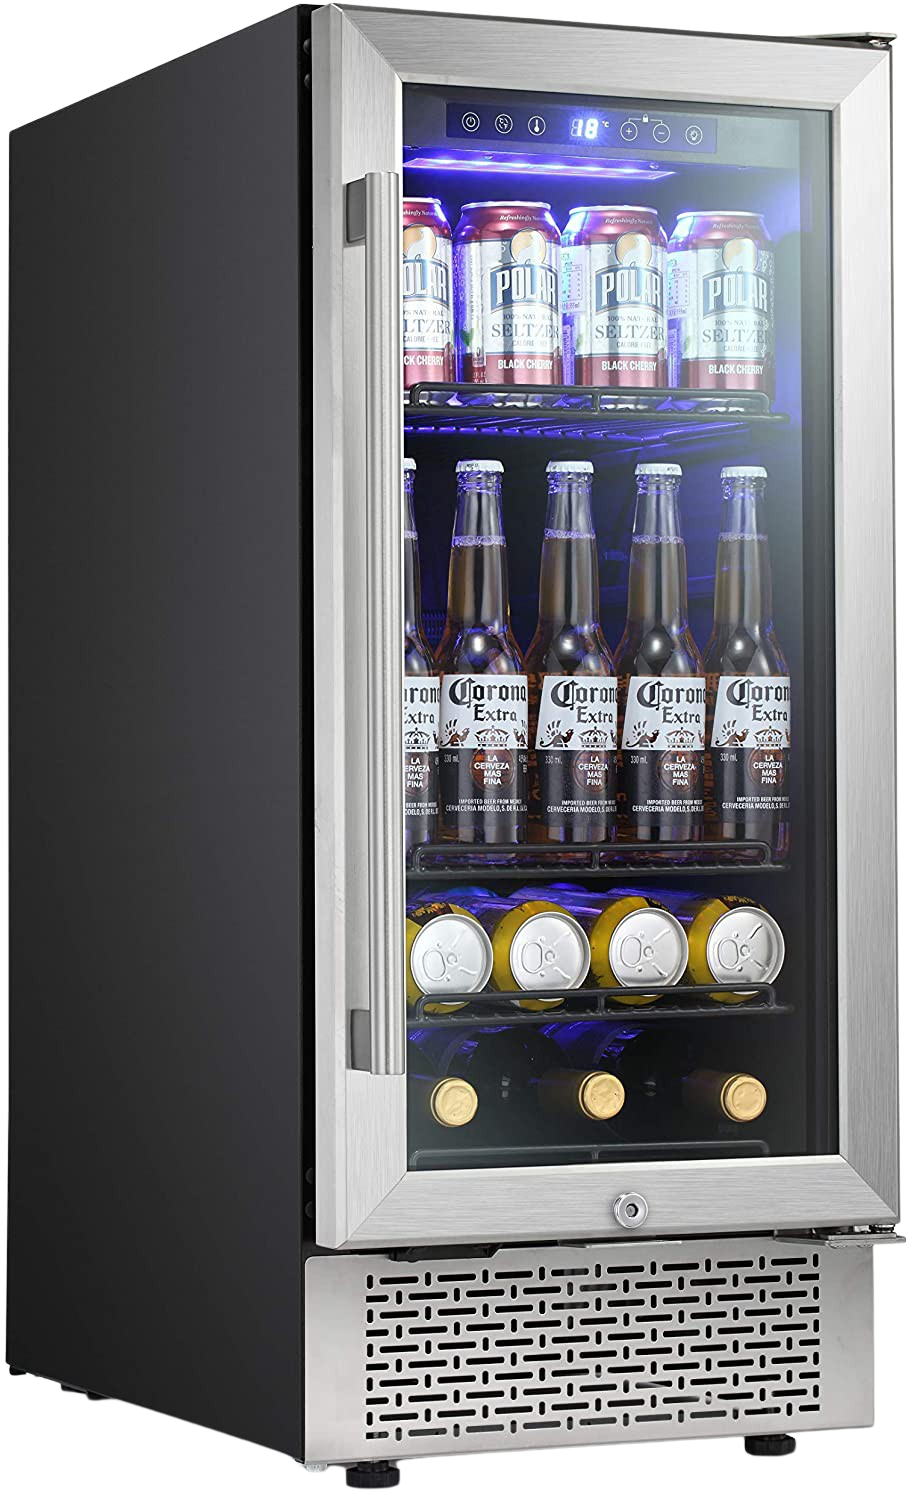 Antarctic Star W74C 15 Inch Beverage Refrigerator with Digital Memory Temperature Control New